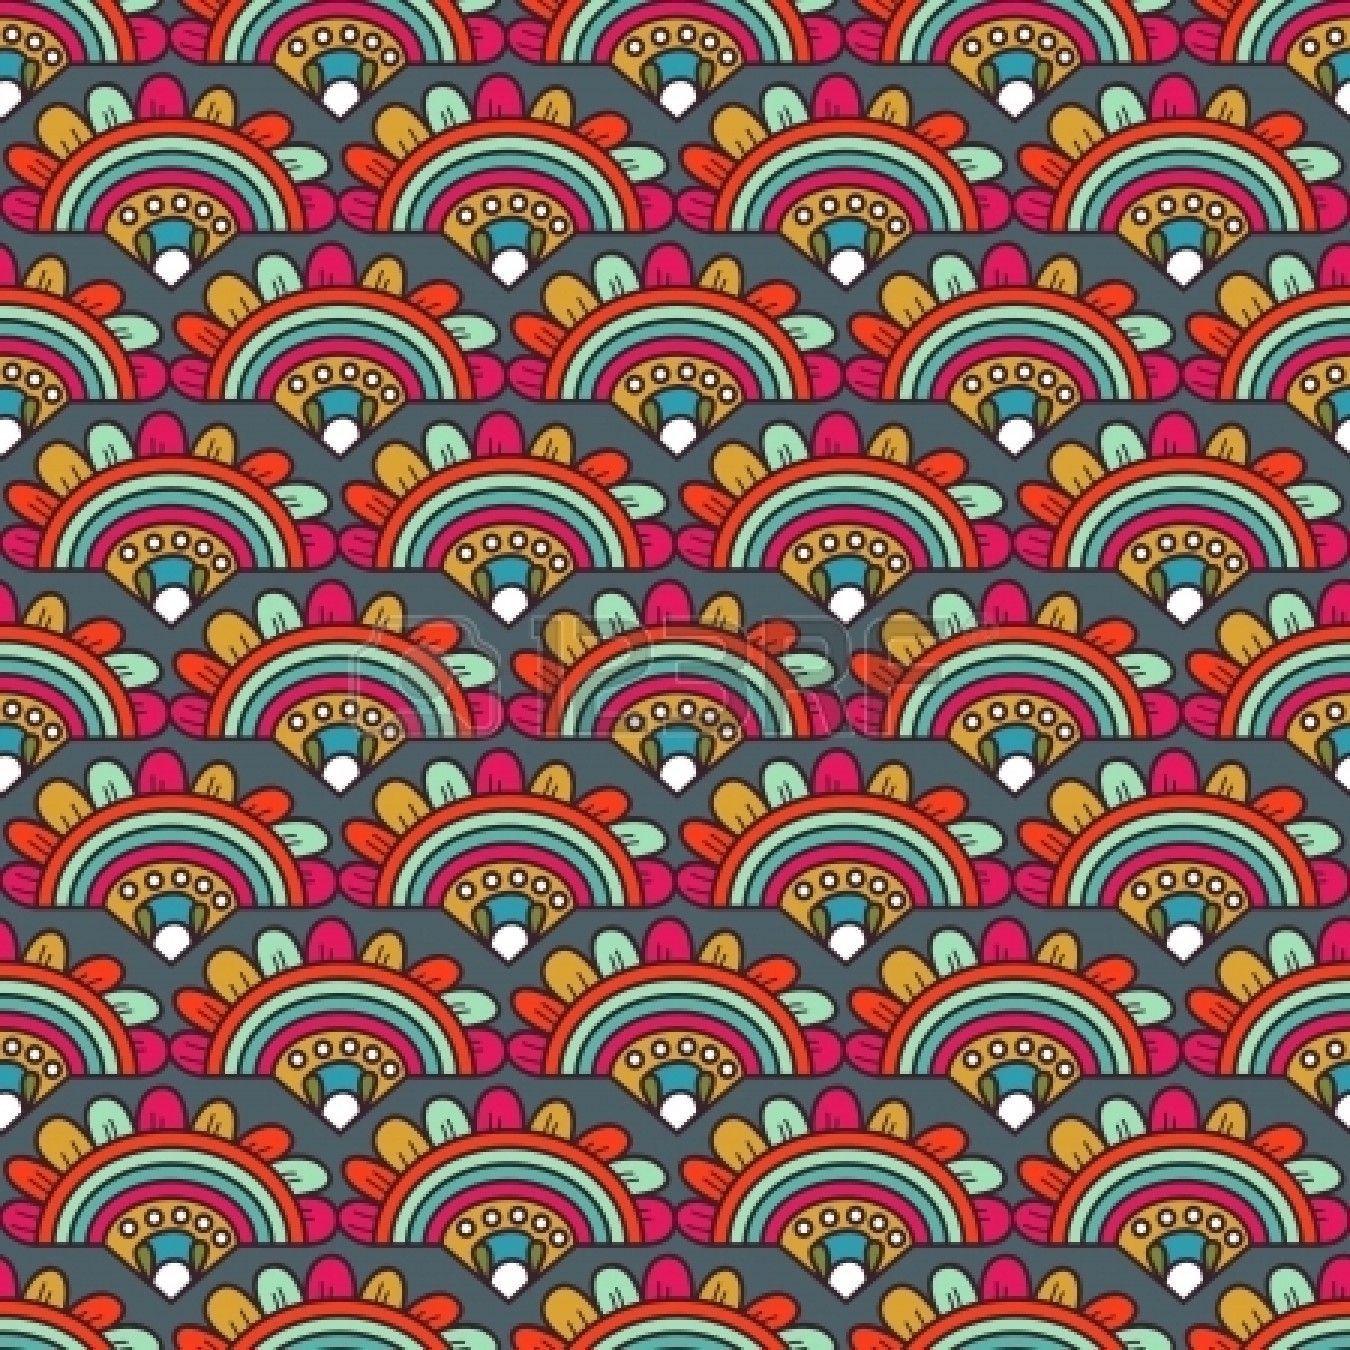 Aztec Tribal Patterns. Aztec Pattern Wallpaper Tumblr. Paper